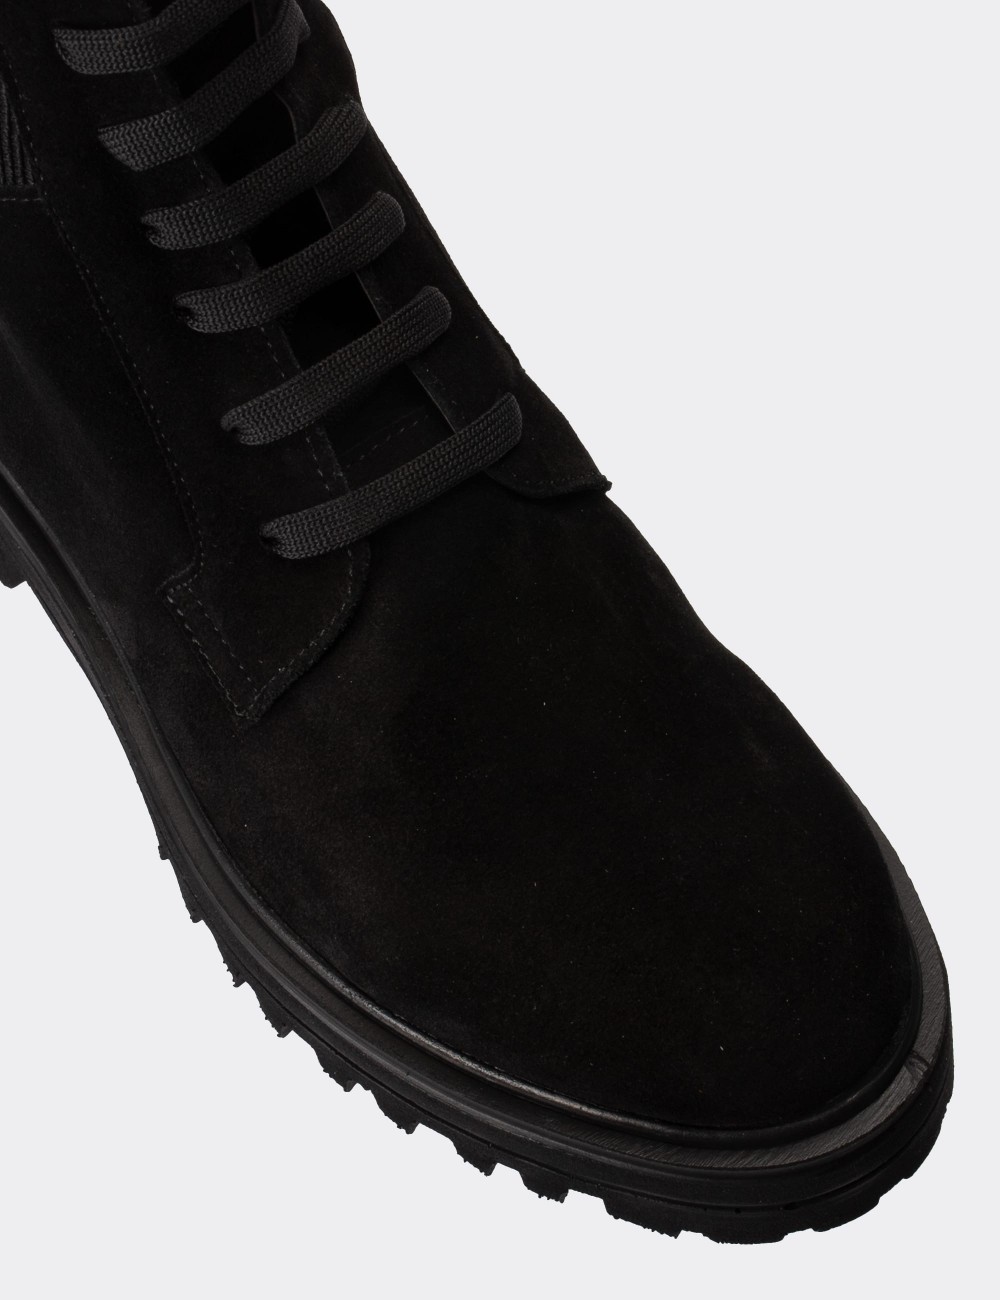 Black Suede Leather Boots - E2021ZSYHC01